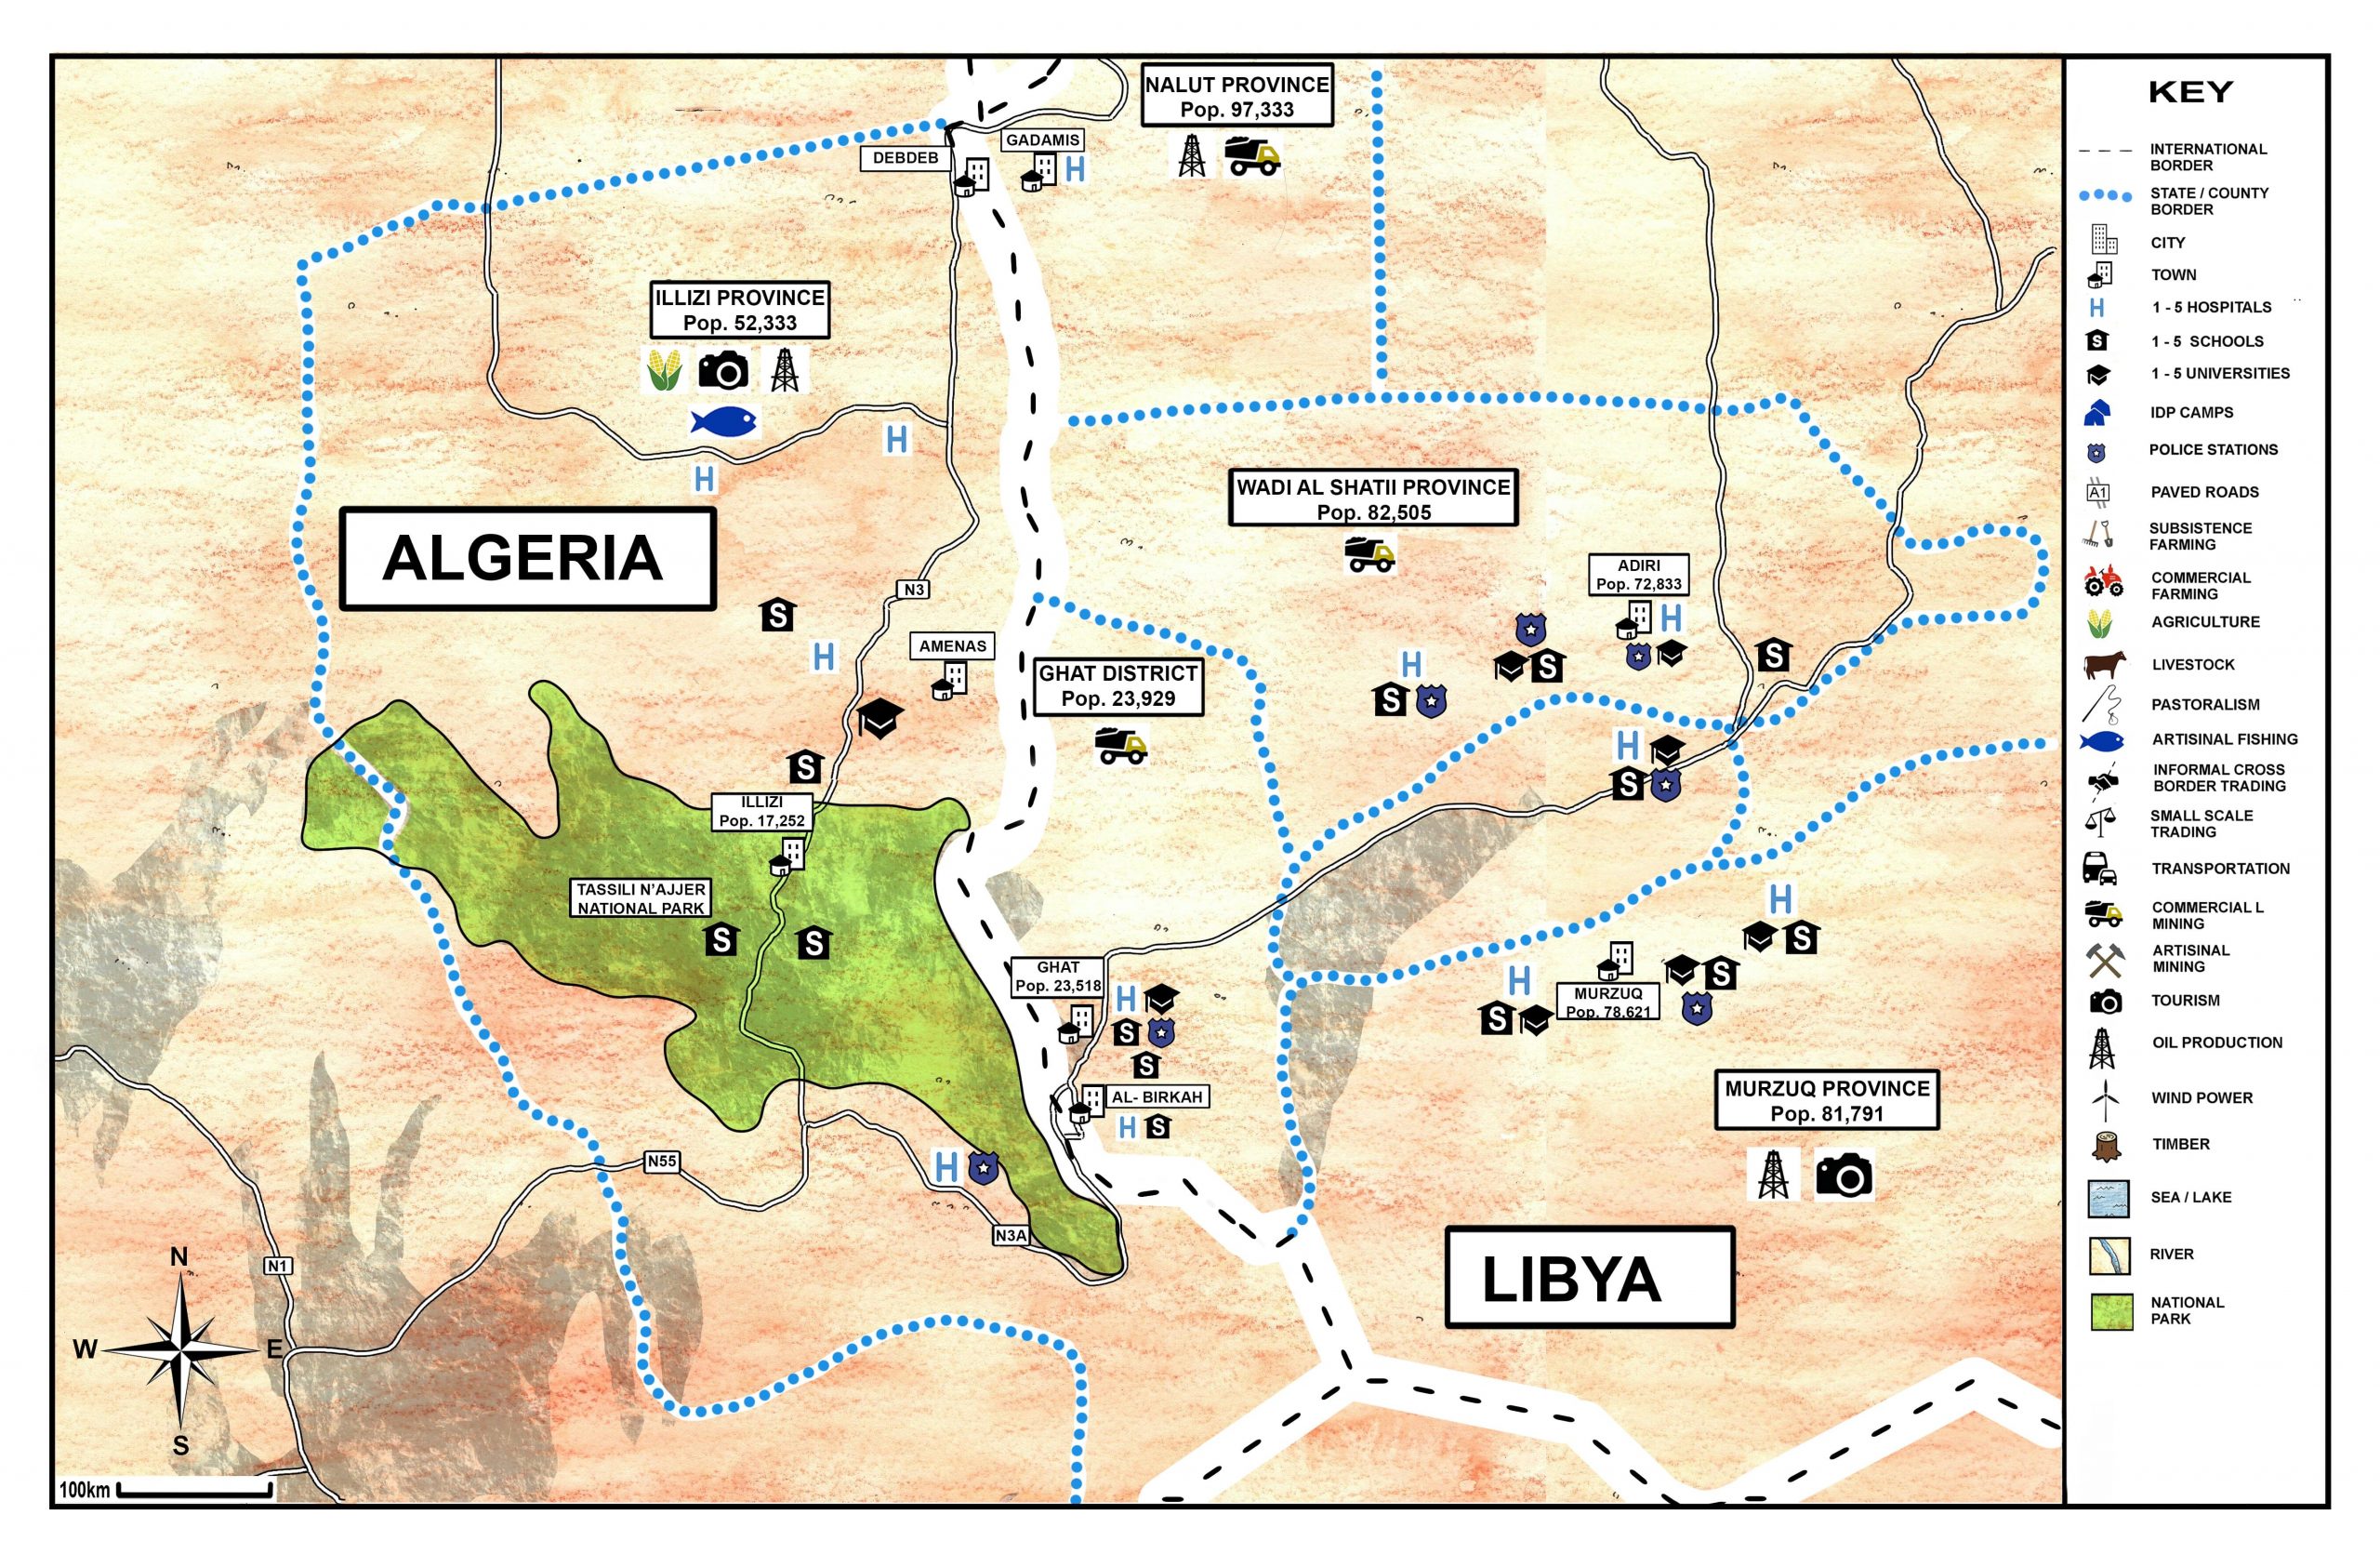 ALGERIA - LIBYA_illustration